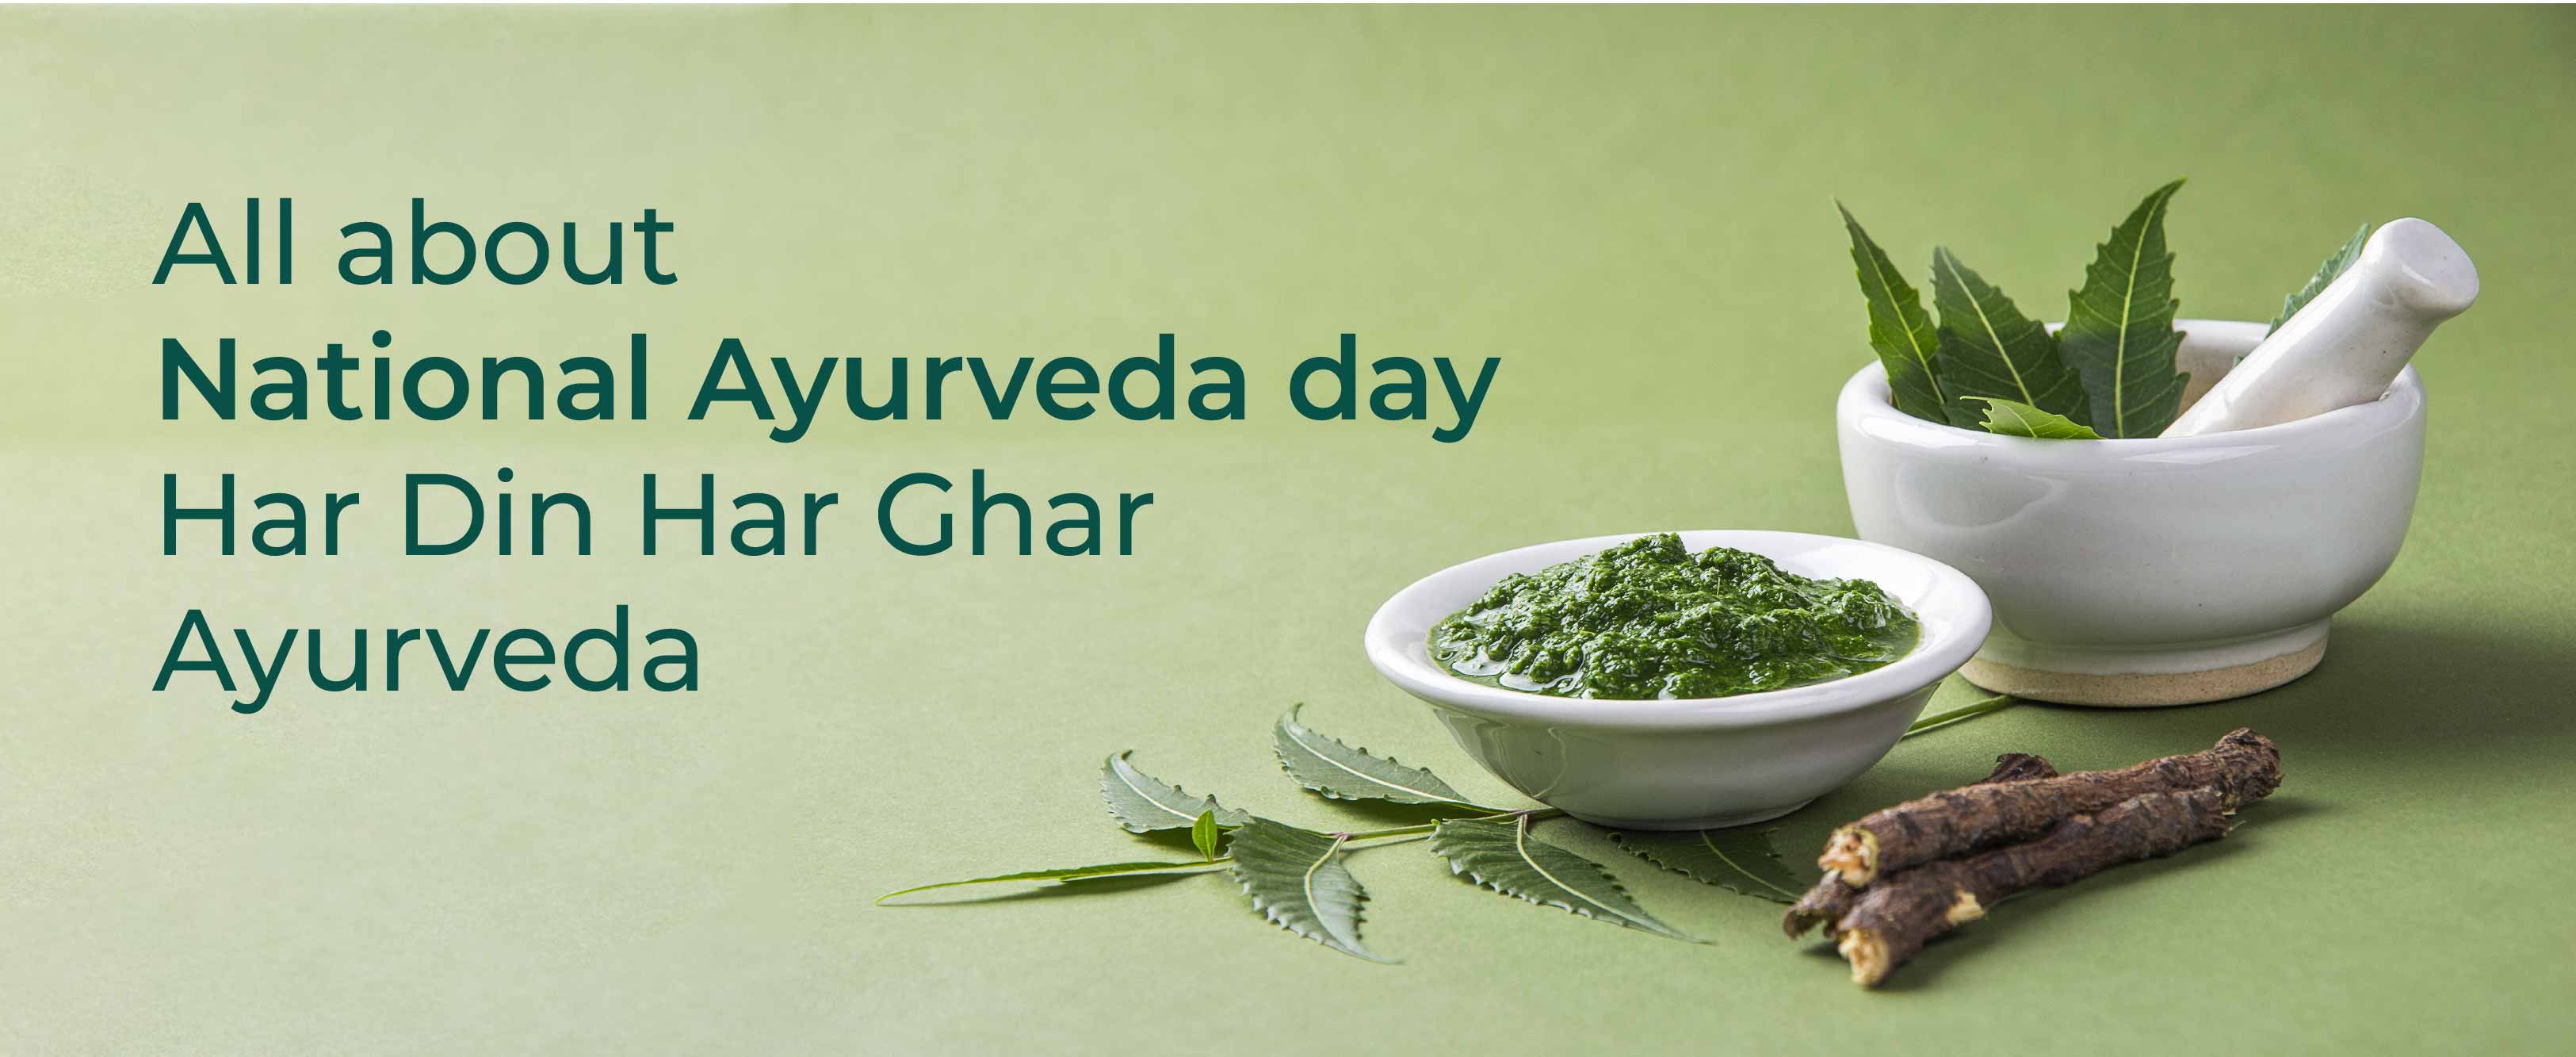 All About National Ayurveda Day - Har Din Har Ghar Ayurveda